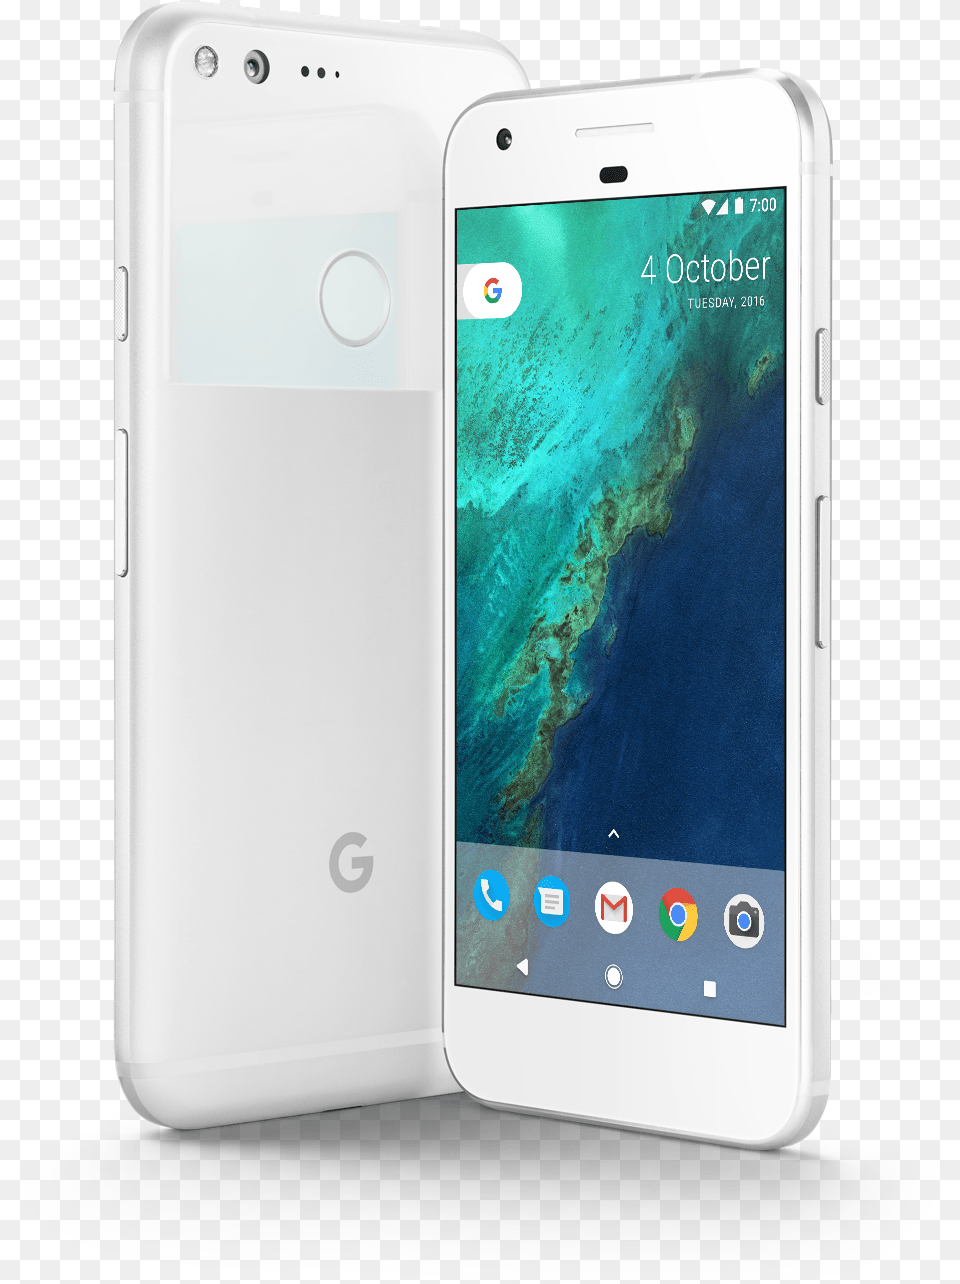 Galaxy Phone Google Pixel Xl Prezzo, Electronics, Mobile Phone Free Transparent Png